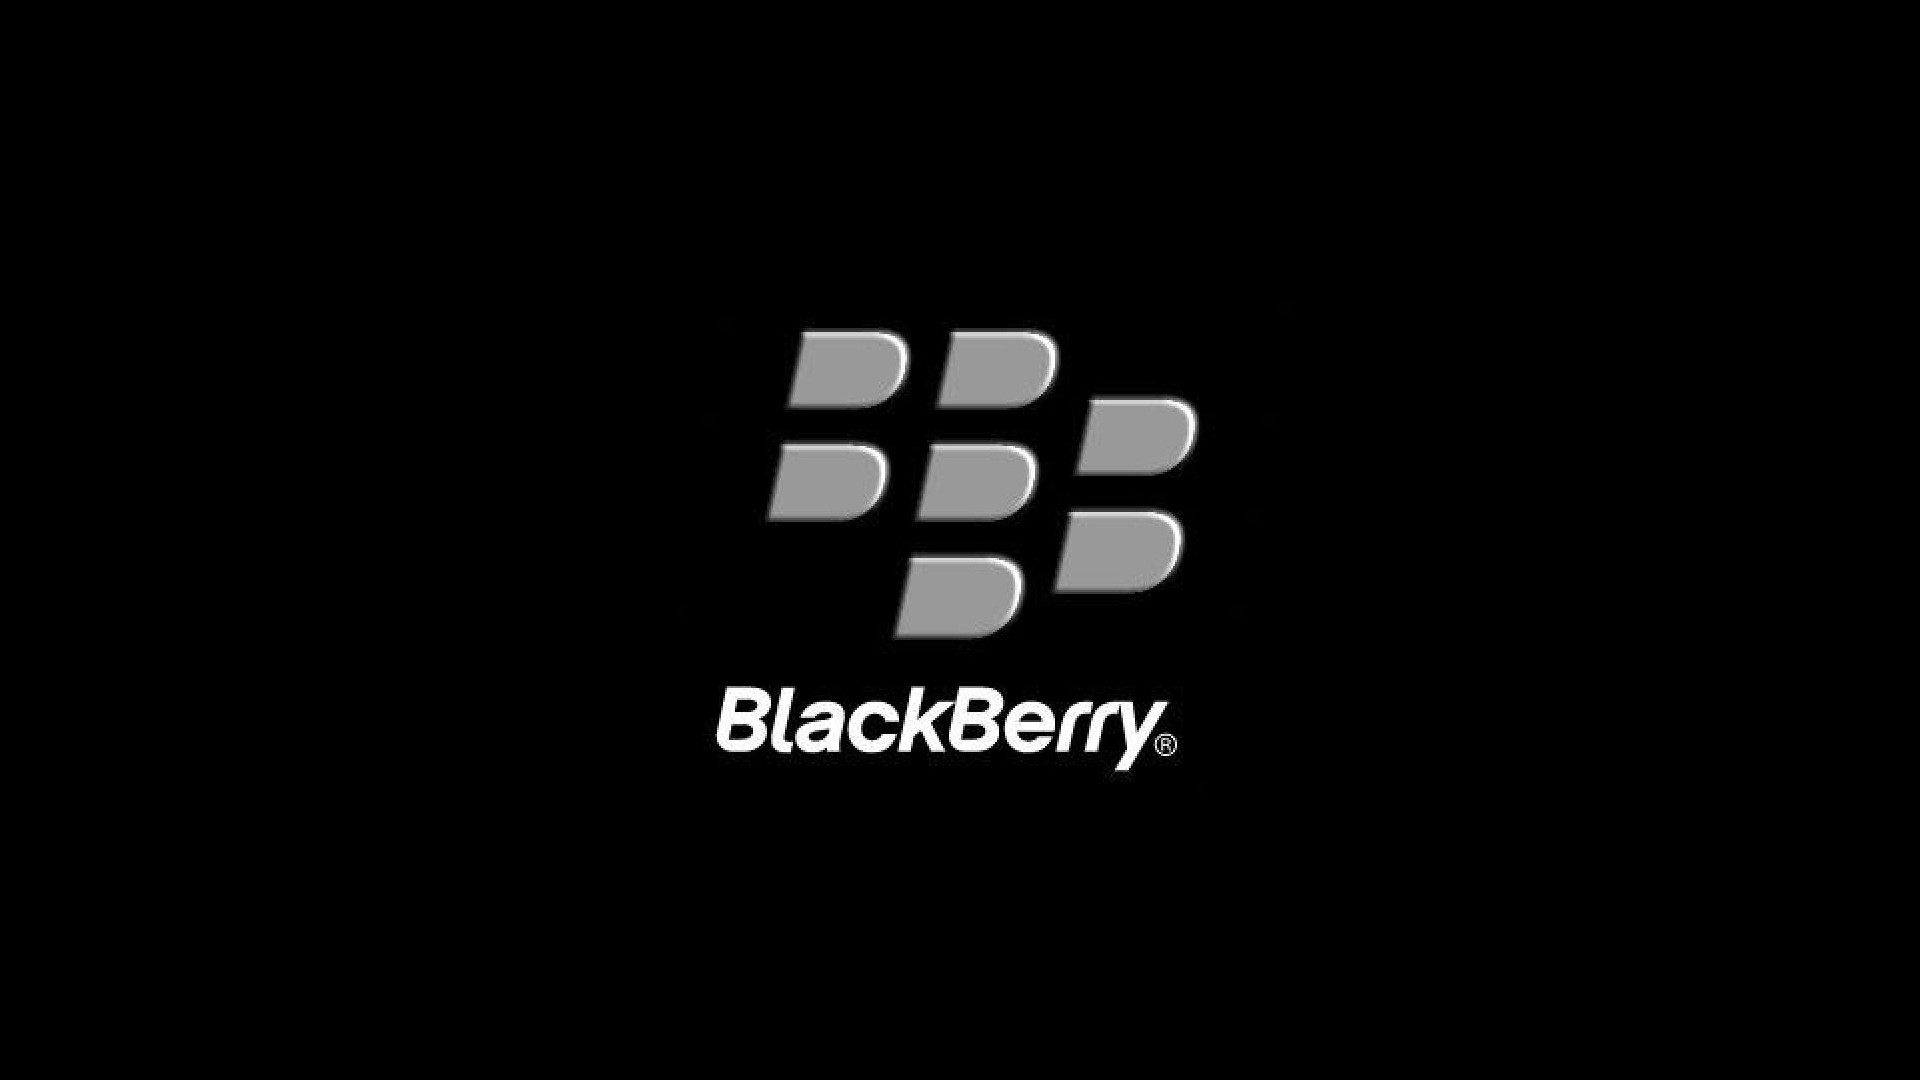  BlackBerry Logo Wallpaper 01 1920x1080 